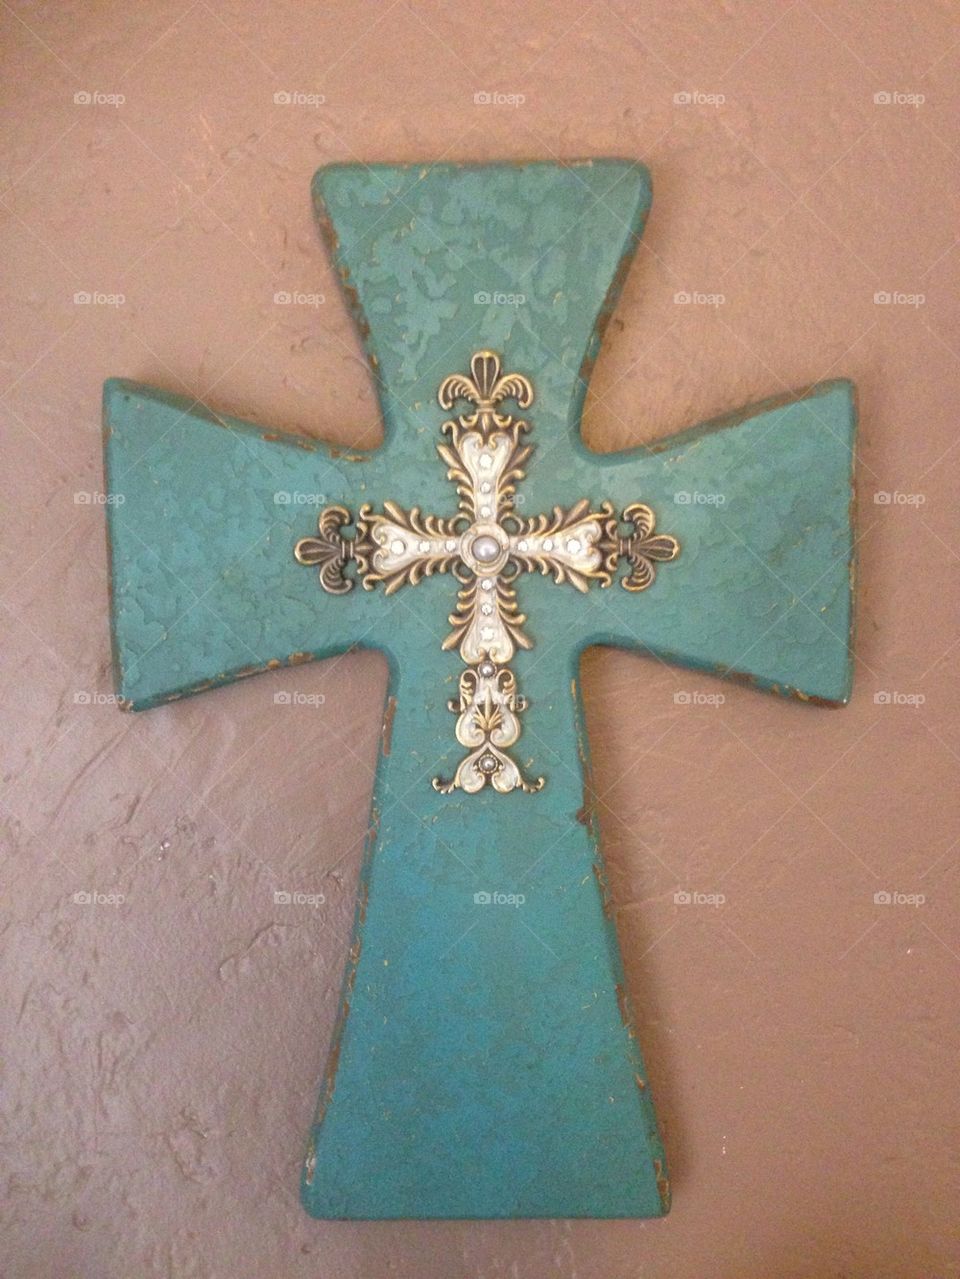 Aqua cross